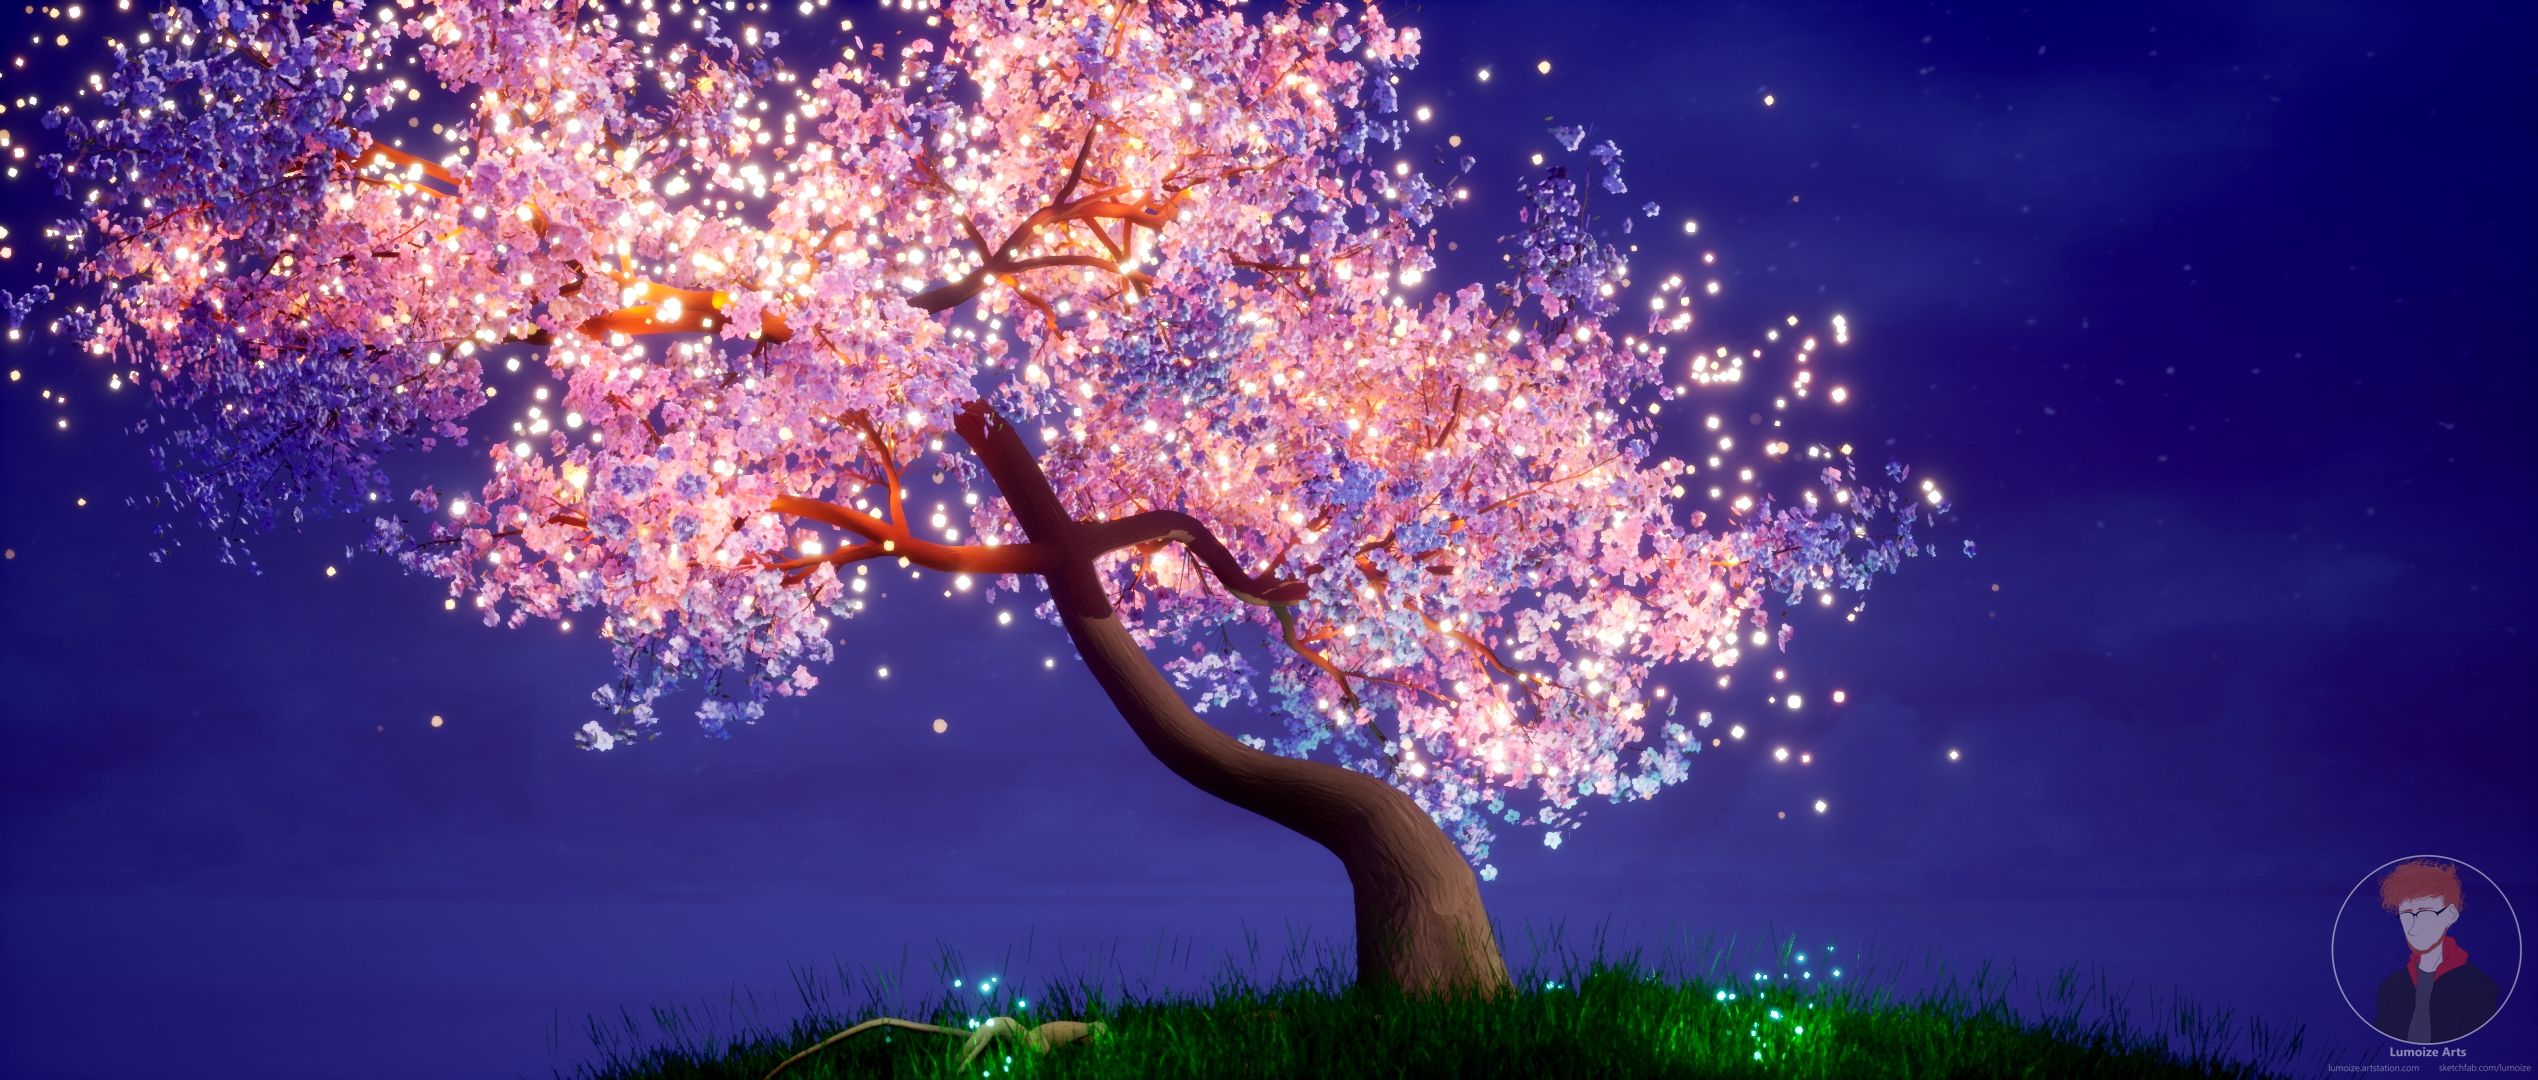 Glowing Cherry Blossom Tree Wallpaper